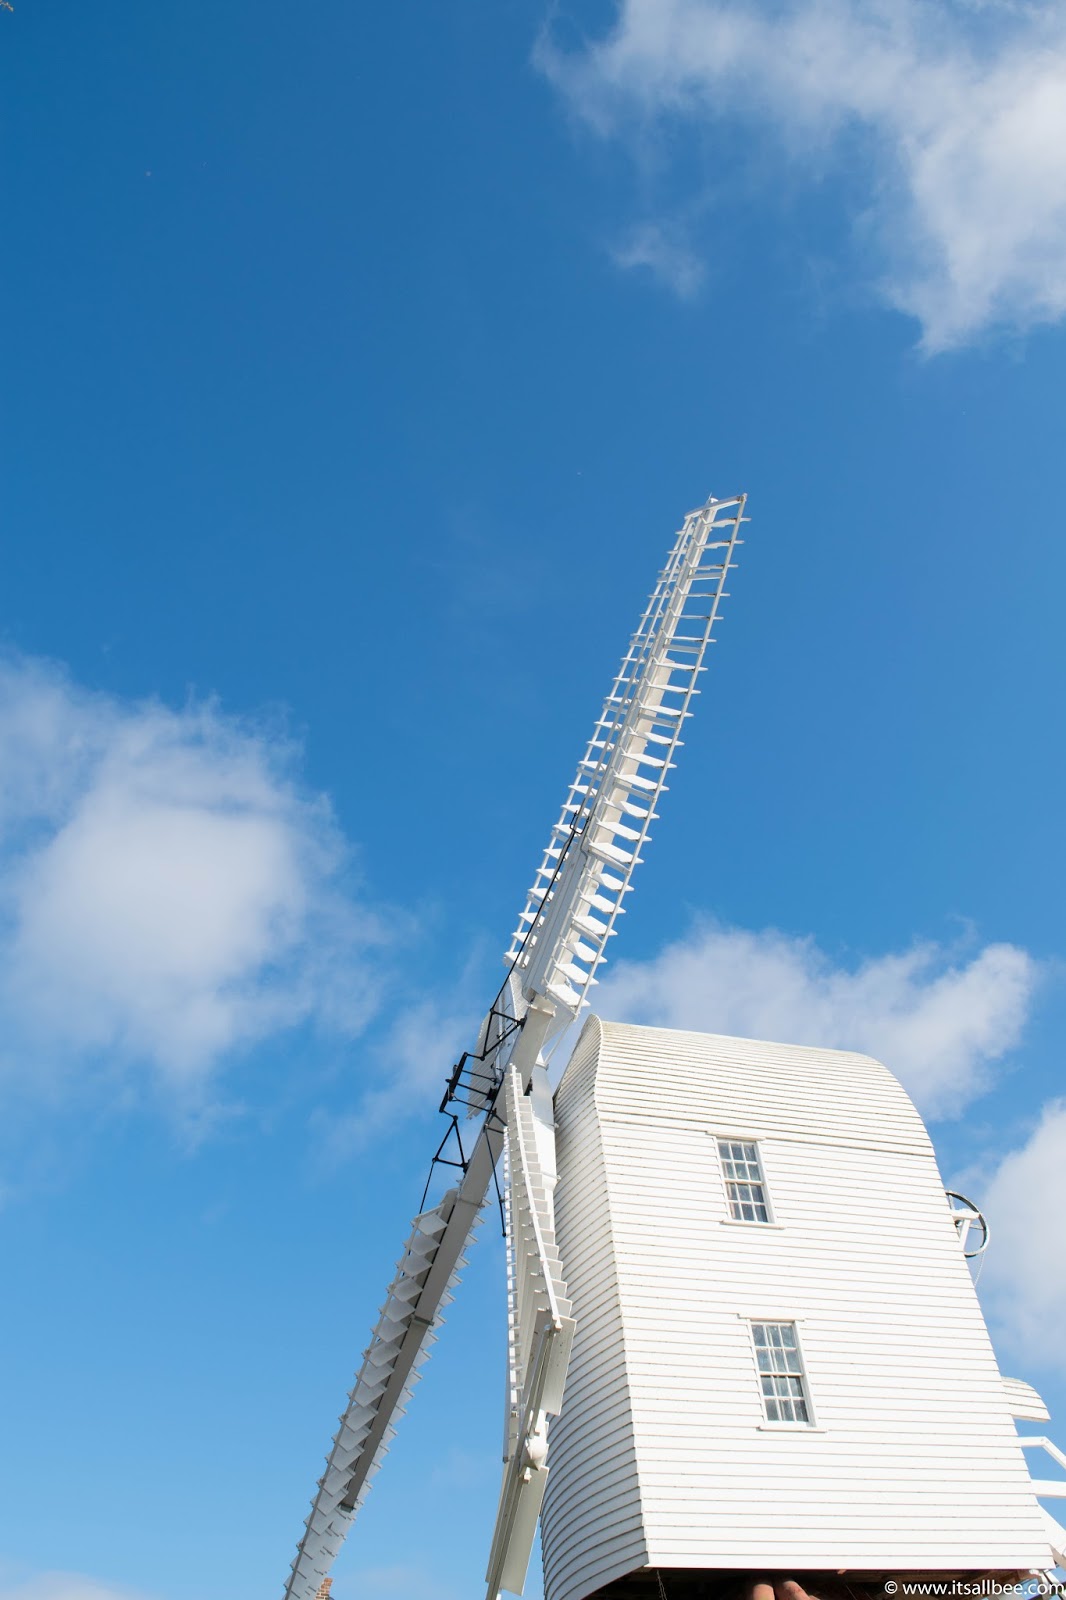 thorpeness windmill